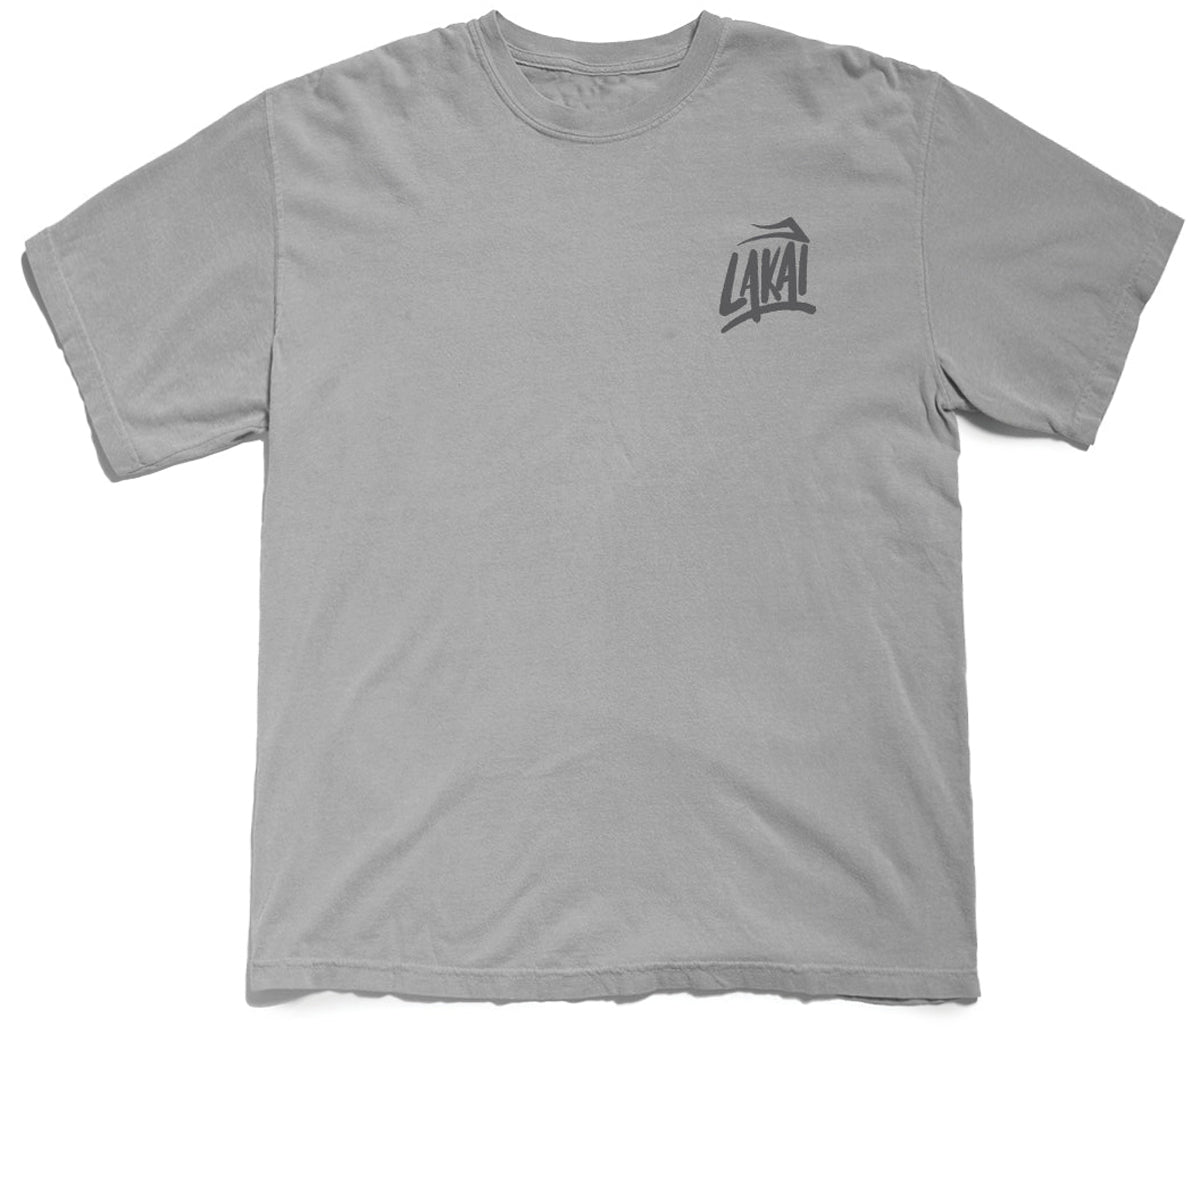 Lakai Brush Garment Dyed T-Shirt - Charcoal image 1